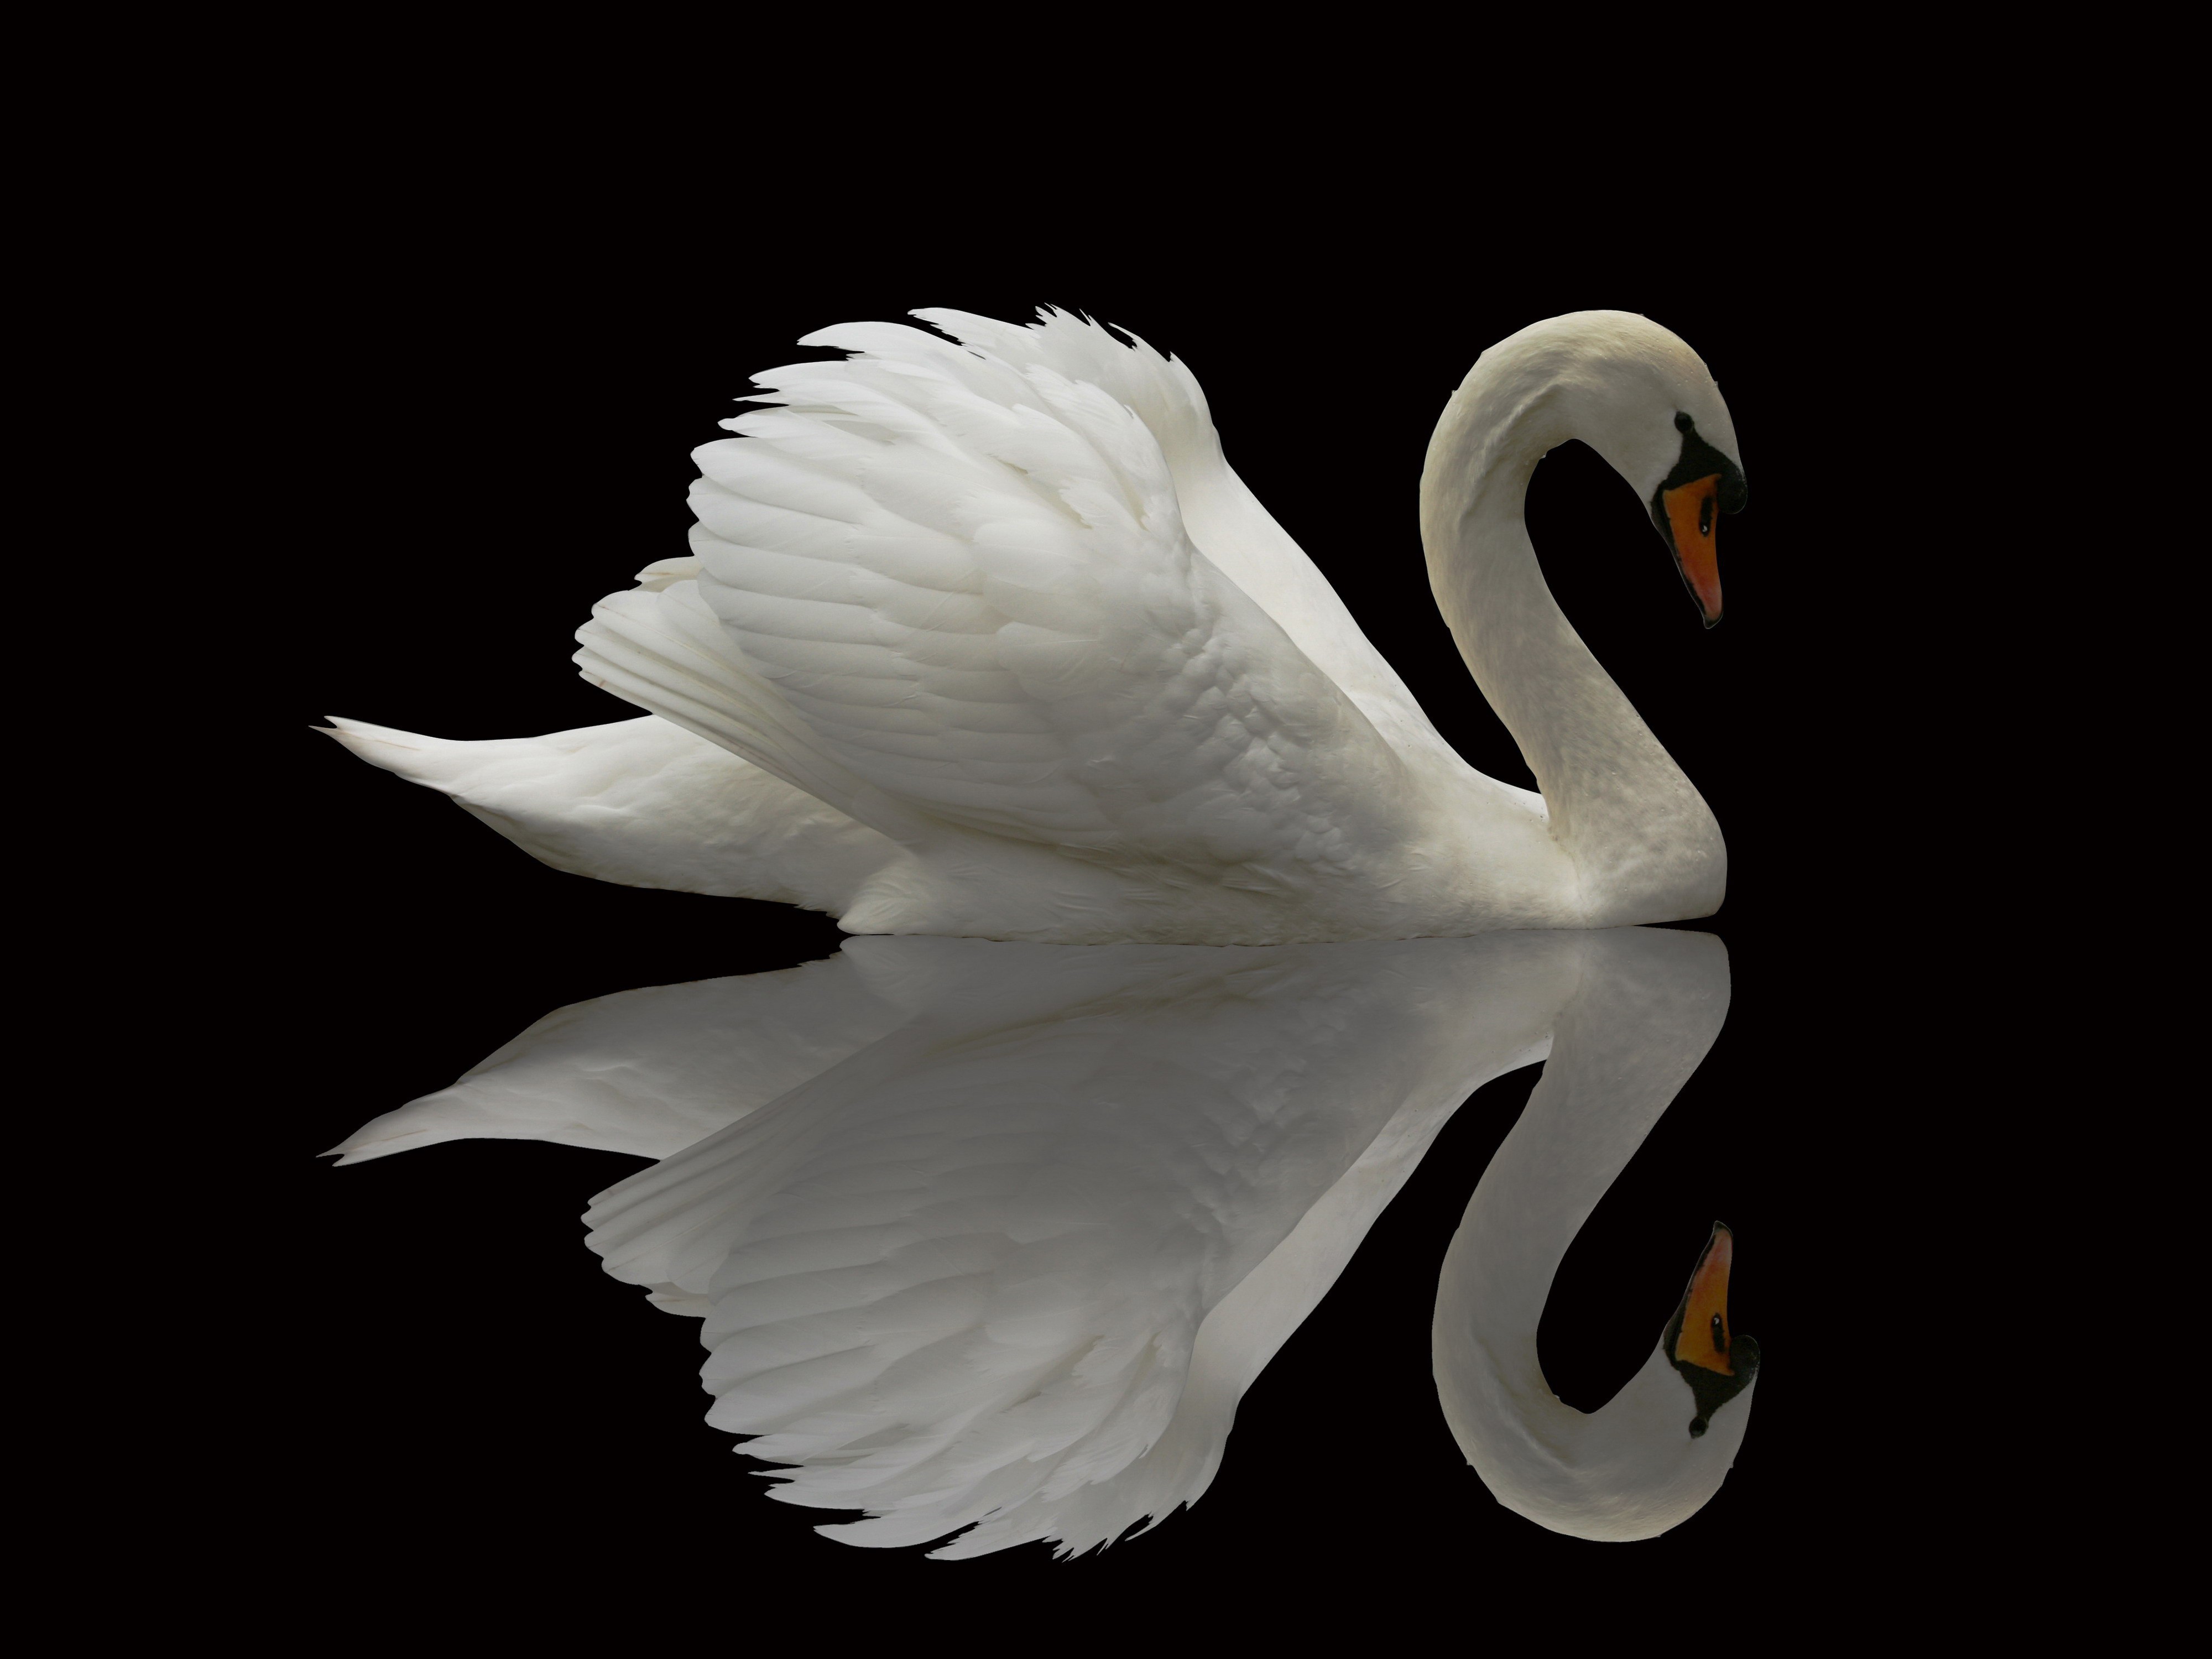 General 4000x3000 wildlife animals swans reflection birds black background simple background